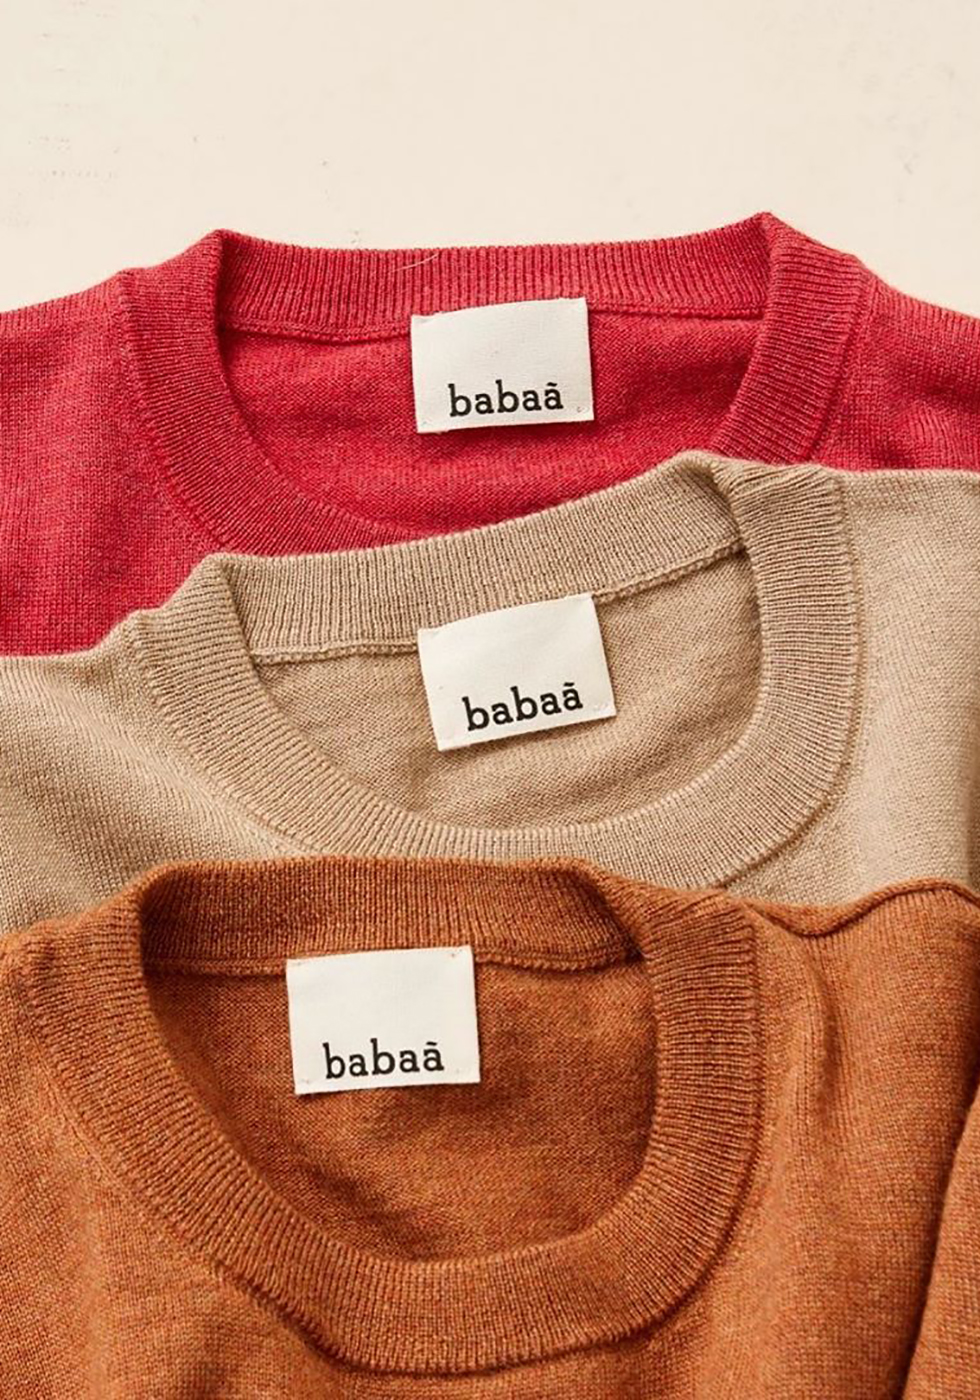 Style Chic: Babaa Knitwear!